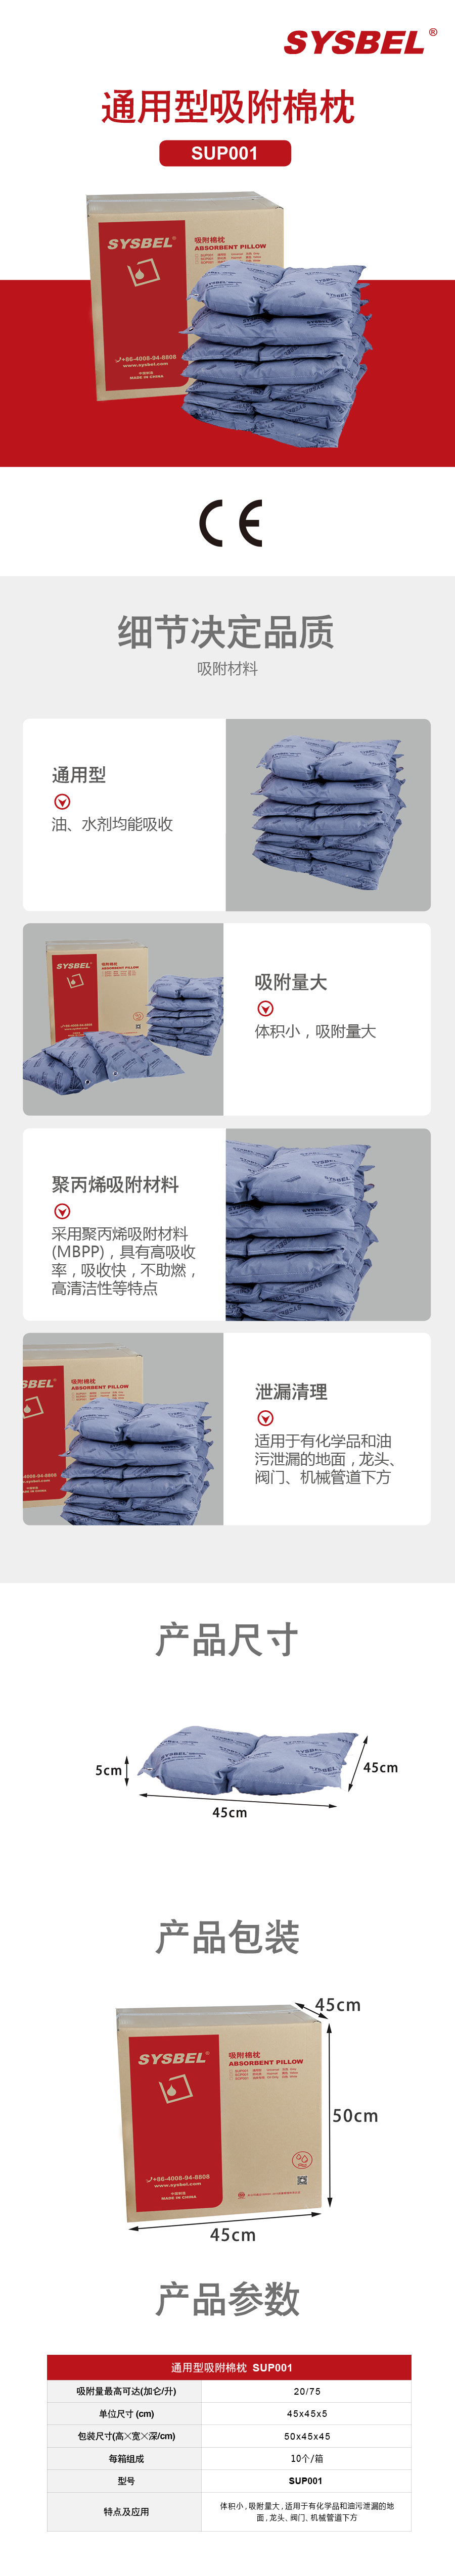 SYSBEL/西斯贝尔 SUP001通用型吸附棉枕 (20Gal/75L）蓝